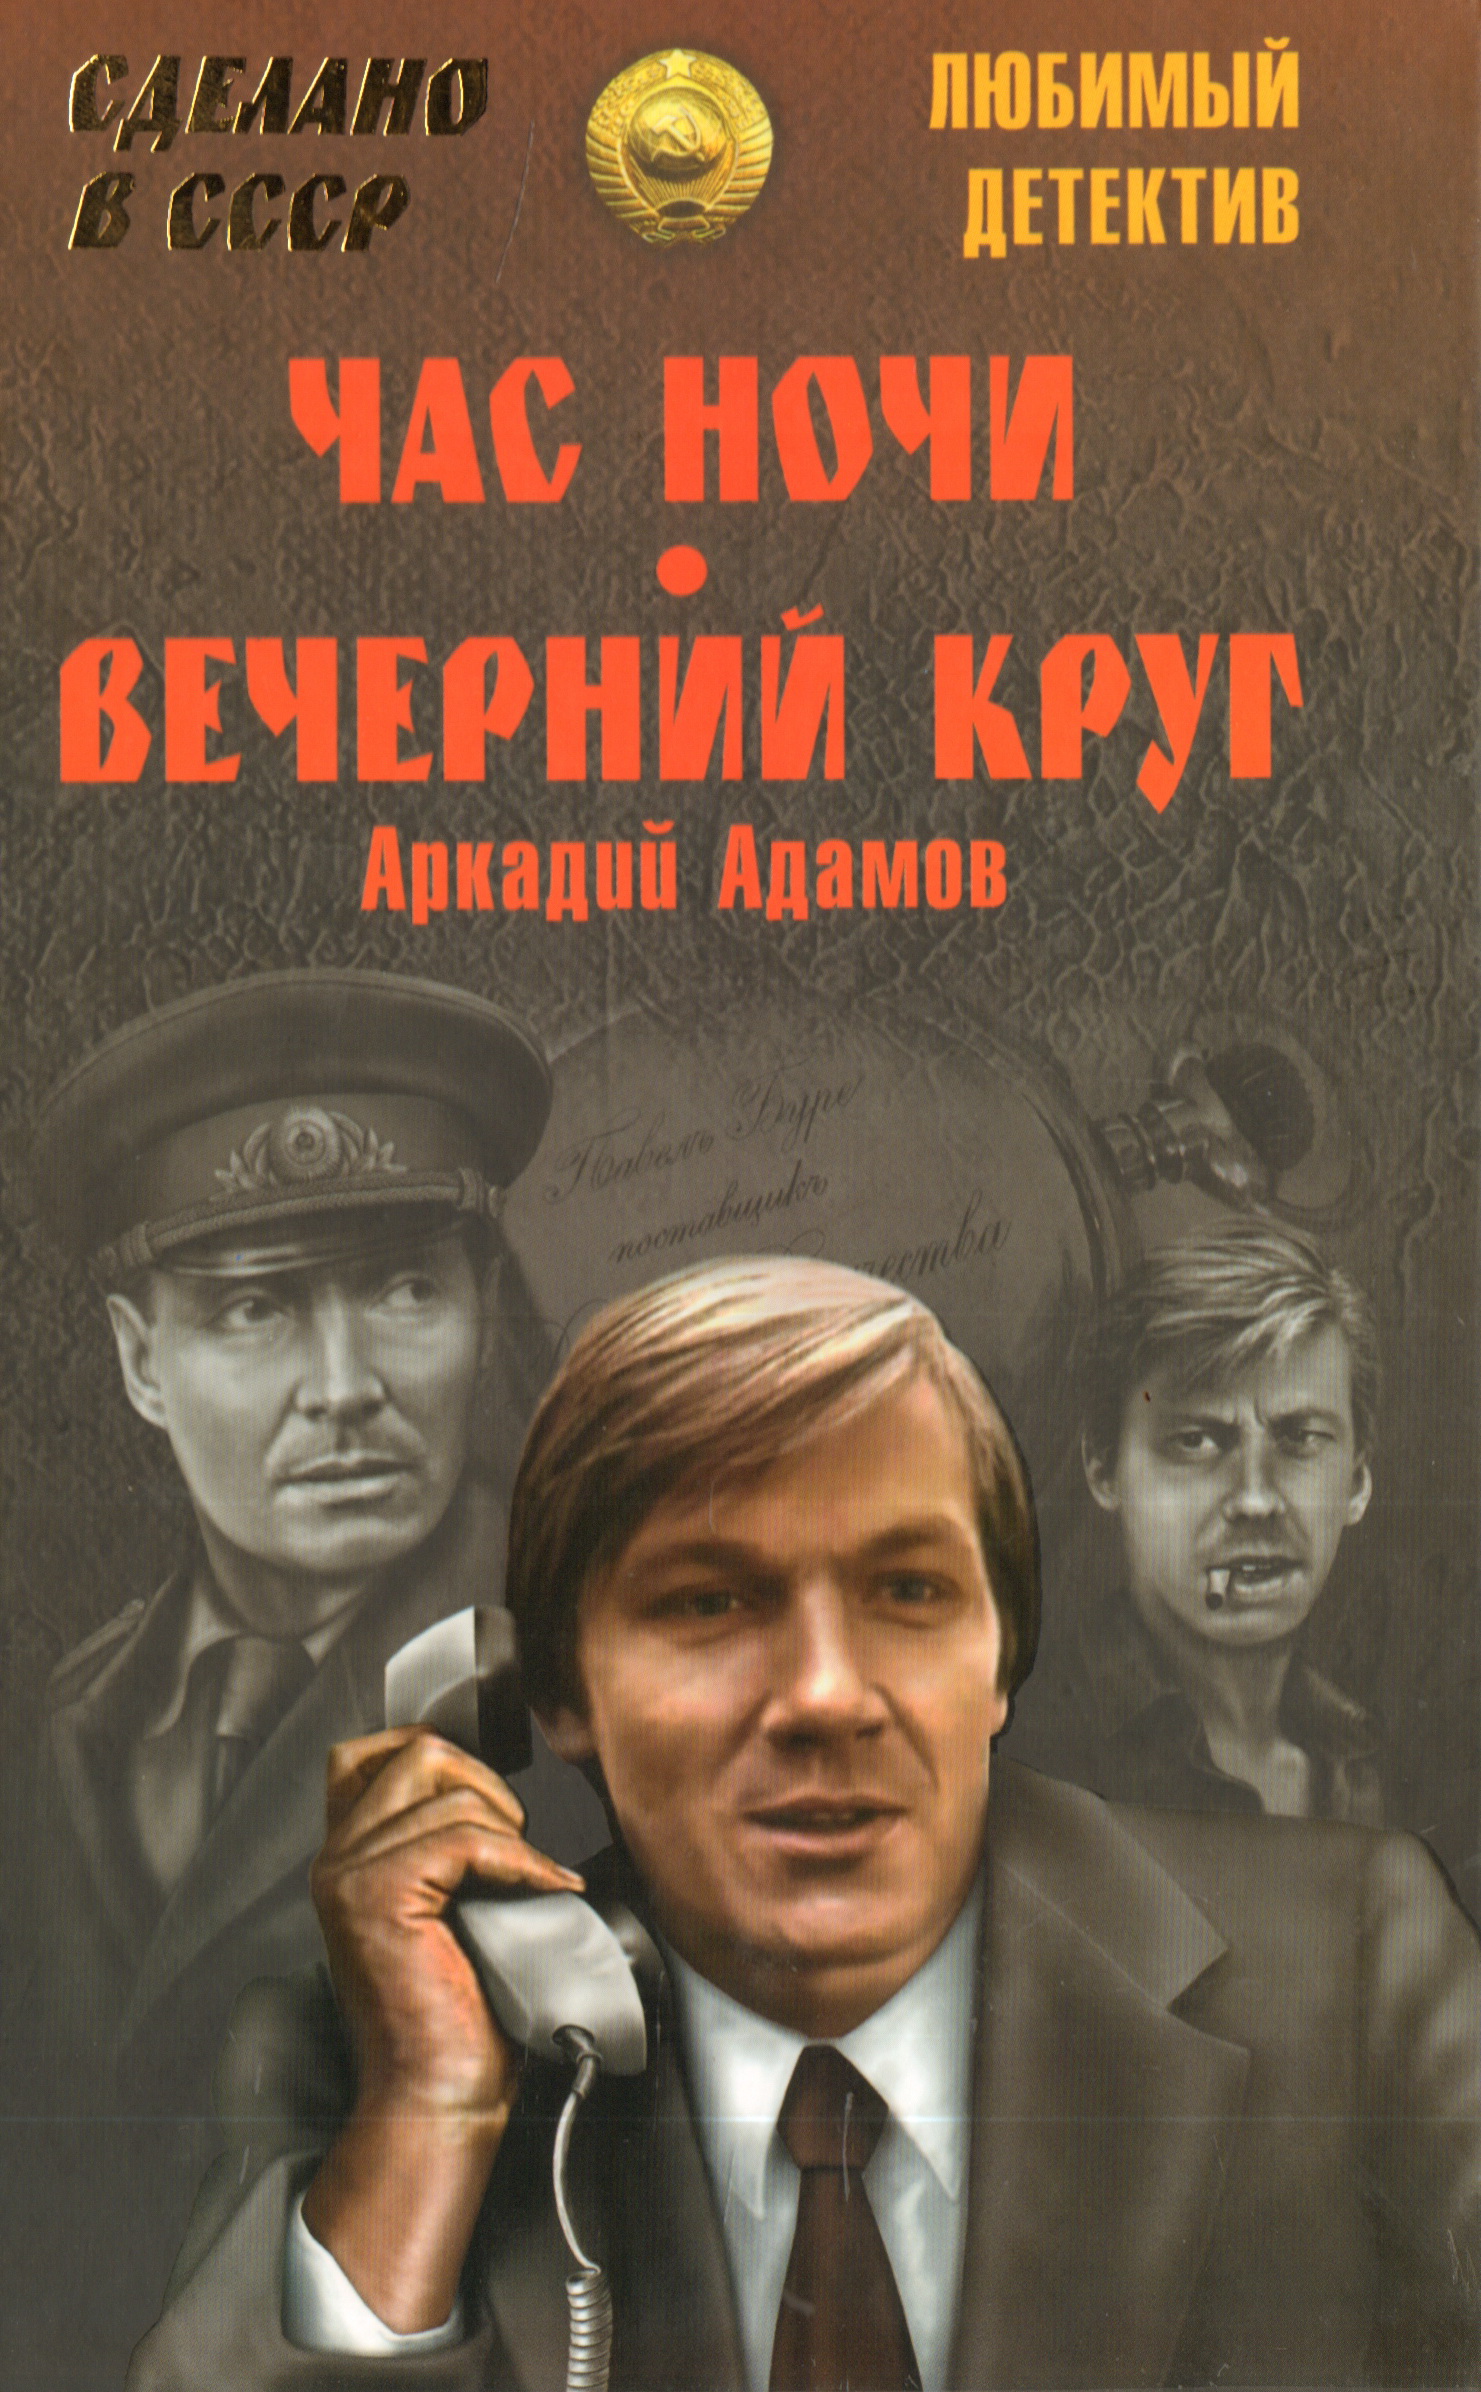 Новинки детективов аудиокнига слушать. Советские детективы. Советские детективы книги.